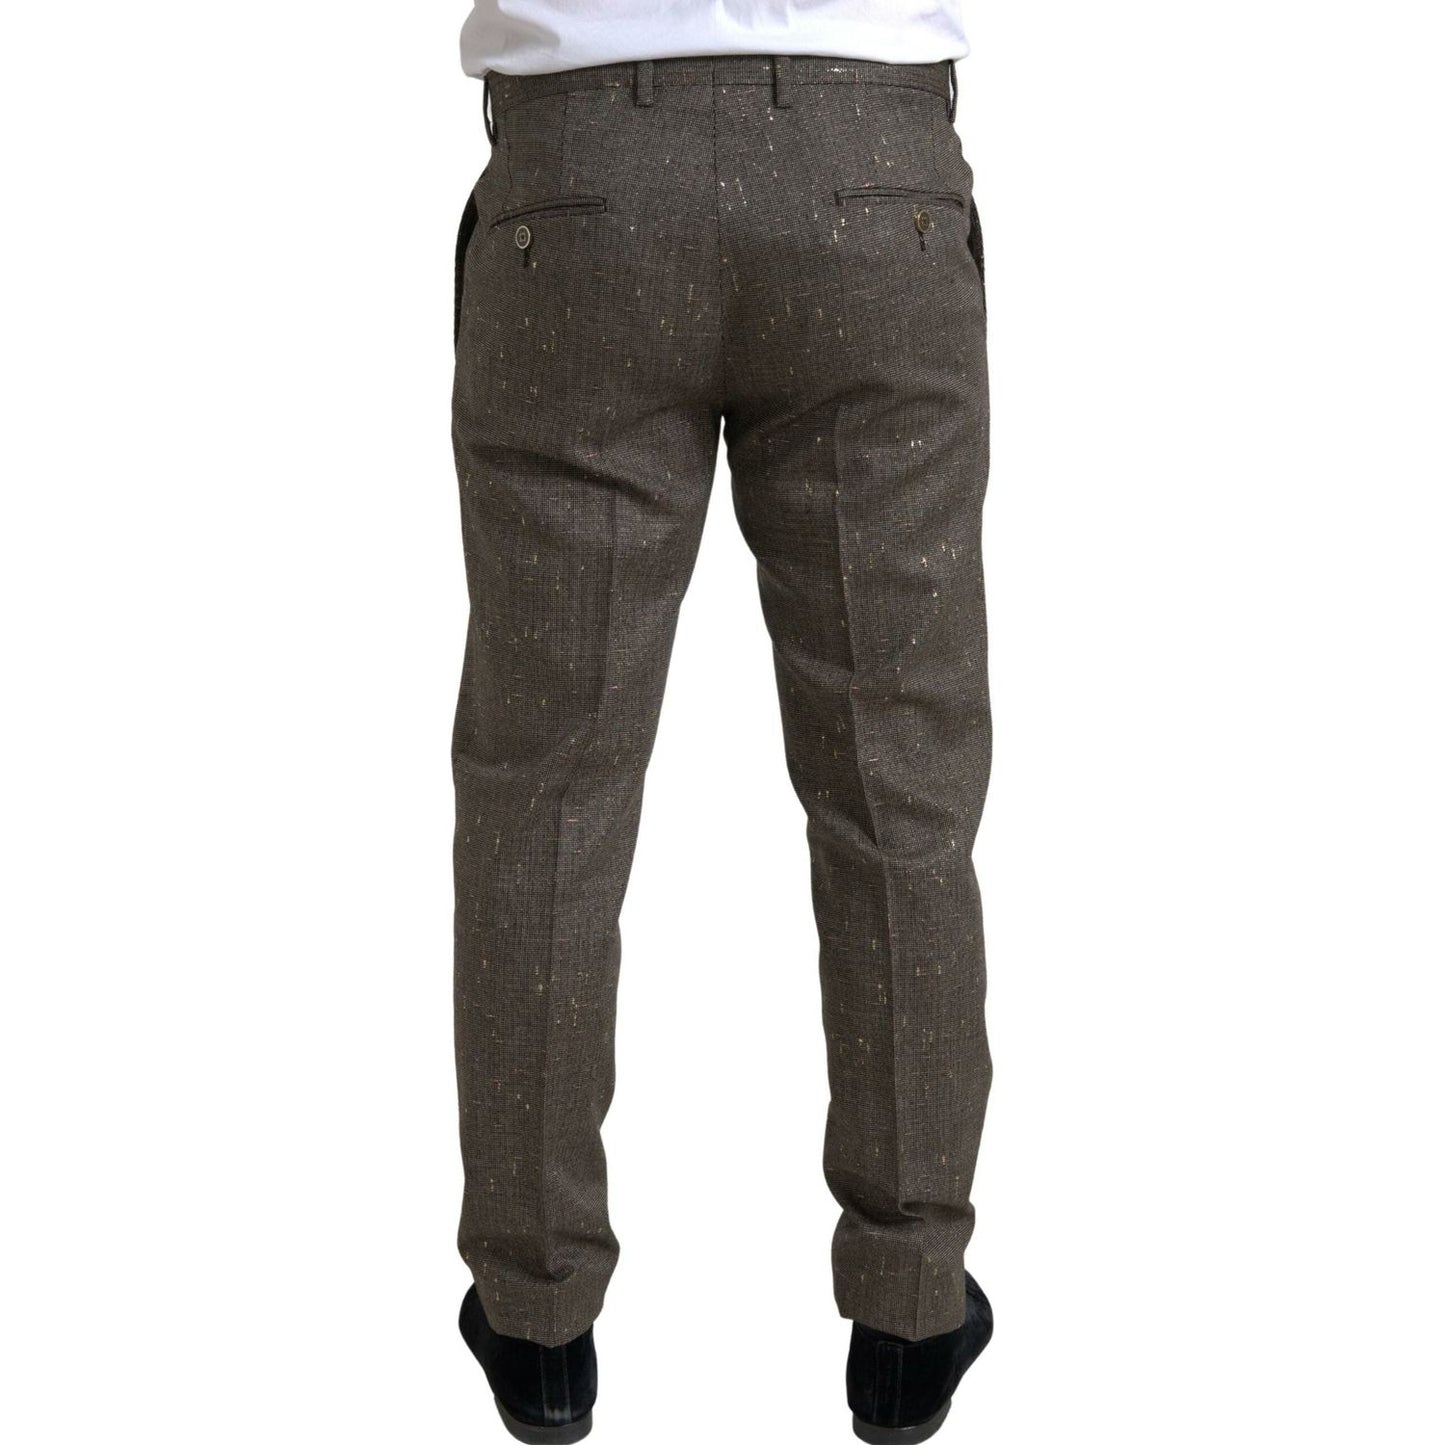 Dolce & Gabbana Elegant Skinny Wool Chino Pants brown-wool-dress-skinny-men-trouser-pants 465A9112bg-scaled-a3619dc8-fd4.jpg